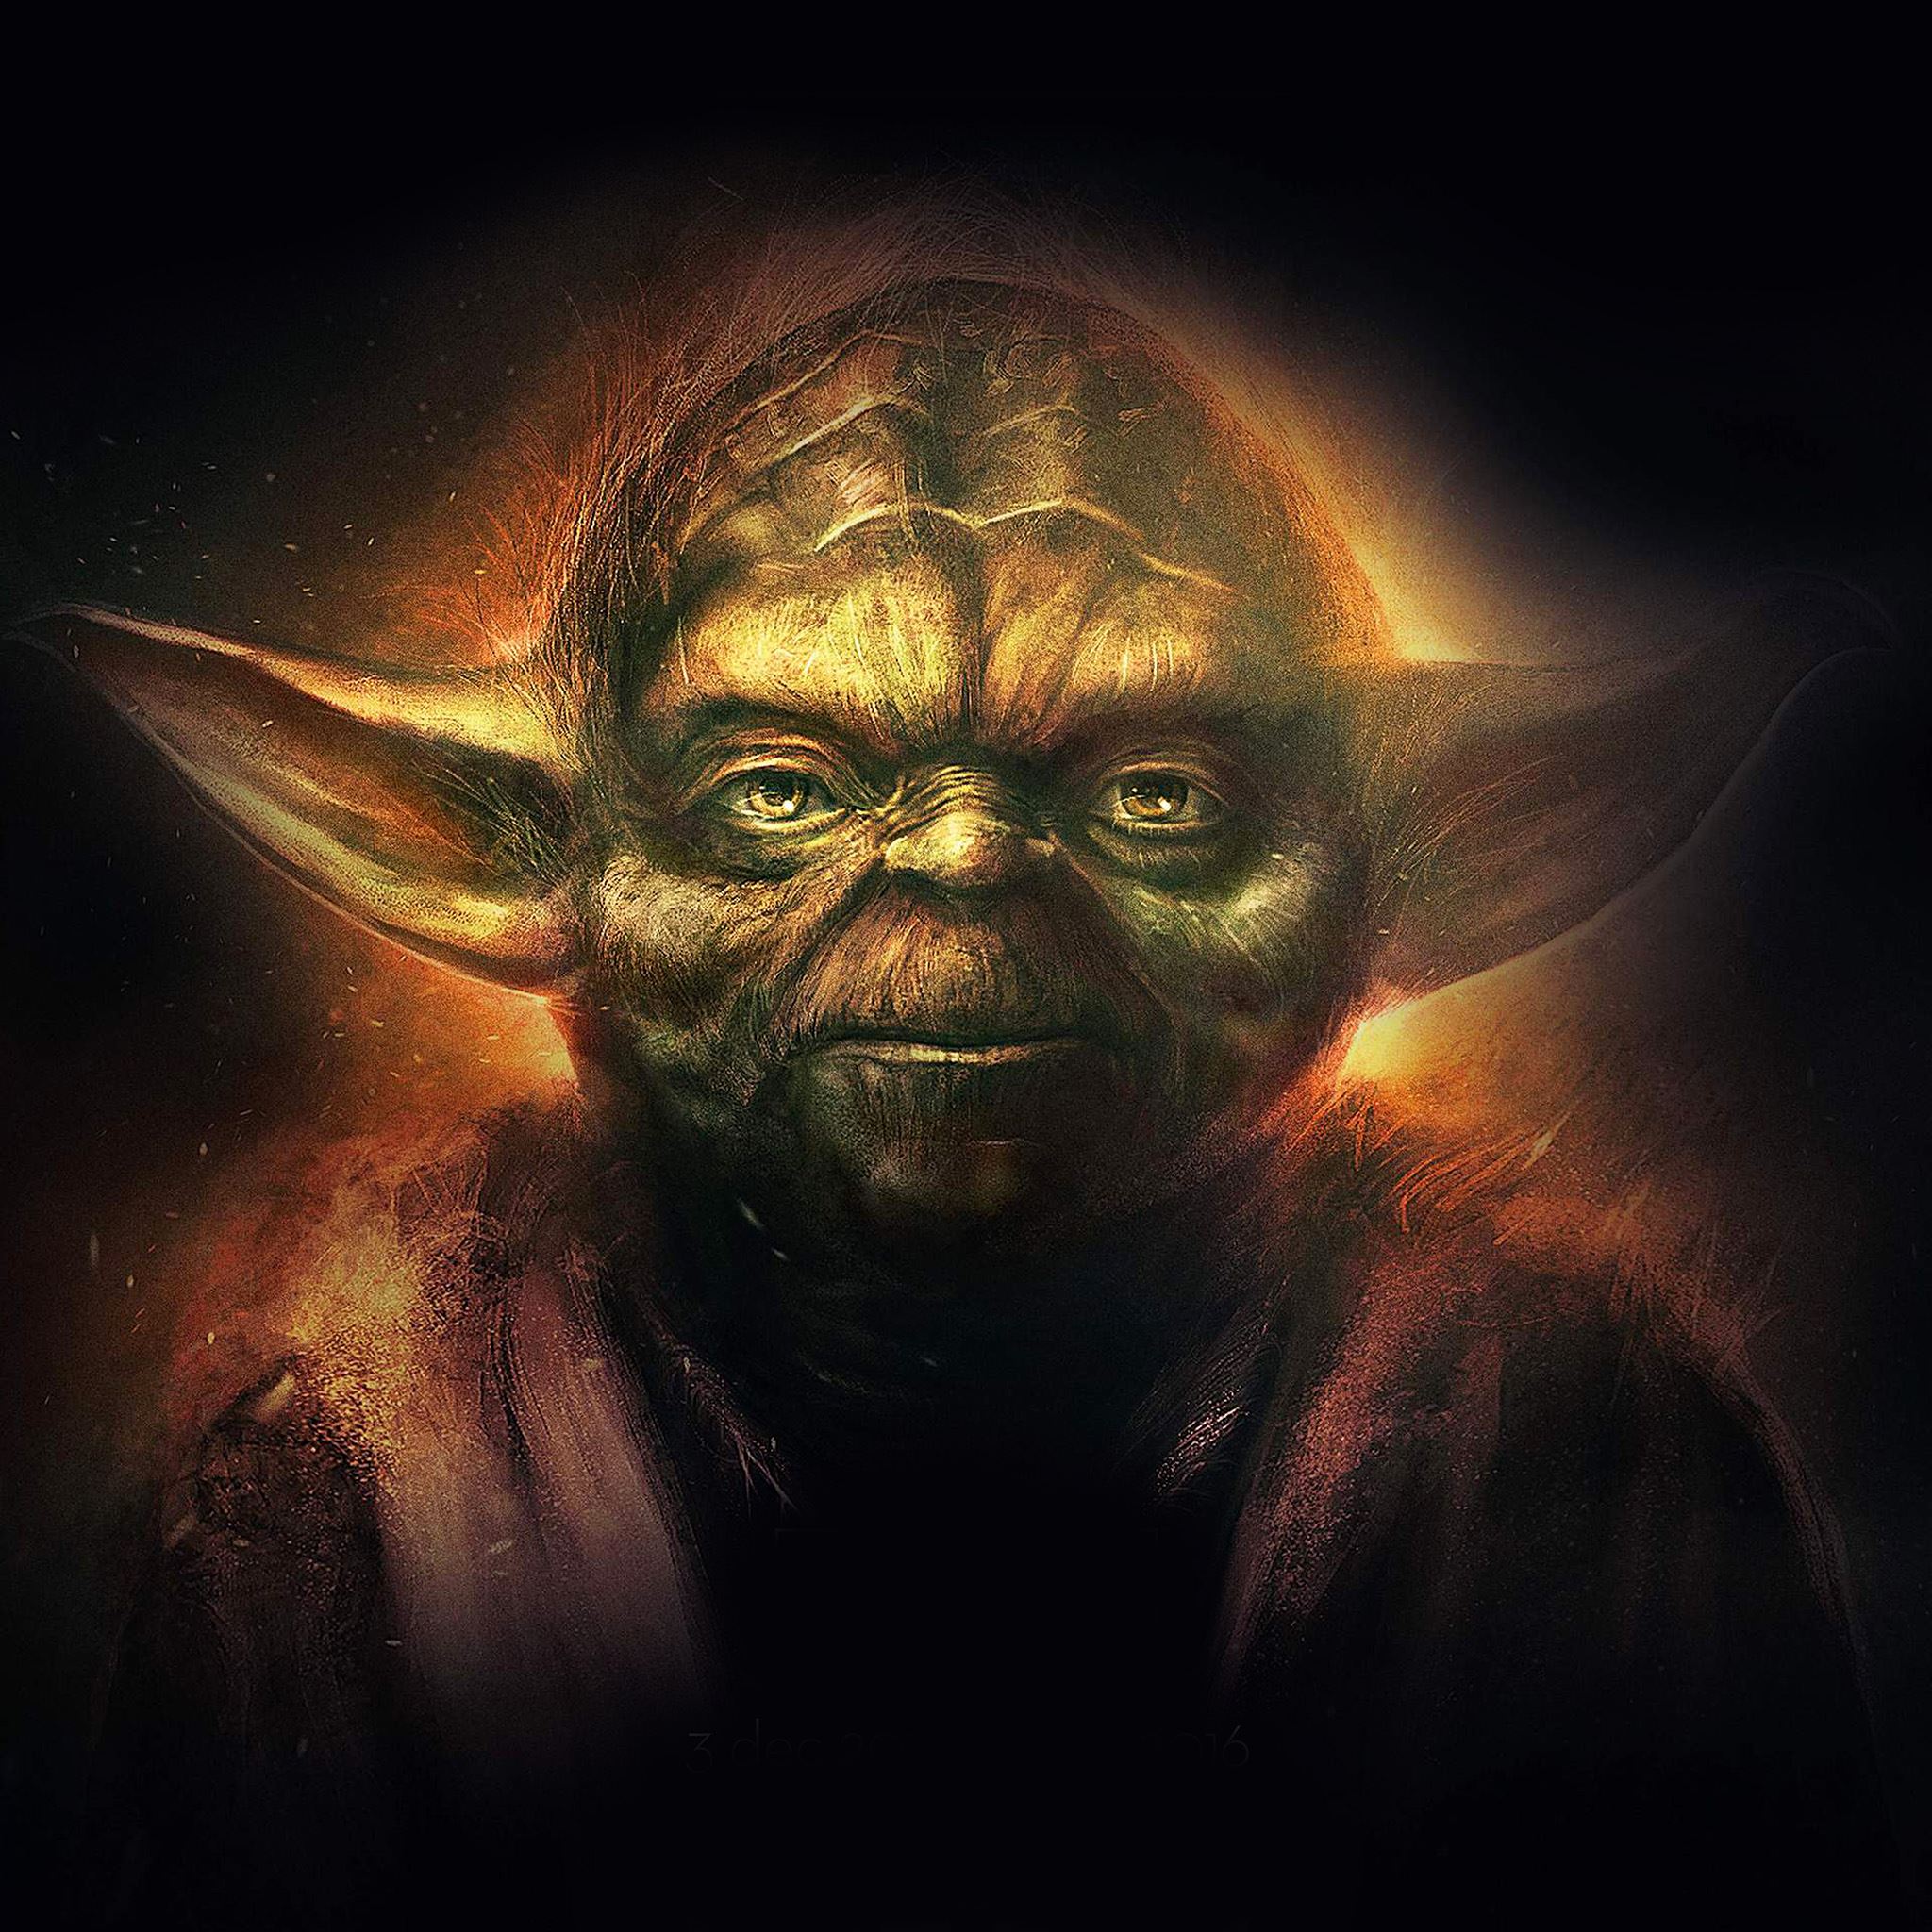 Yoda starwars art dark illlust film poster ipad air wallpapers free download